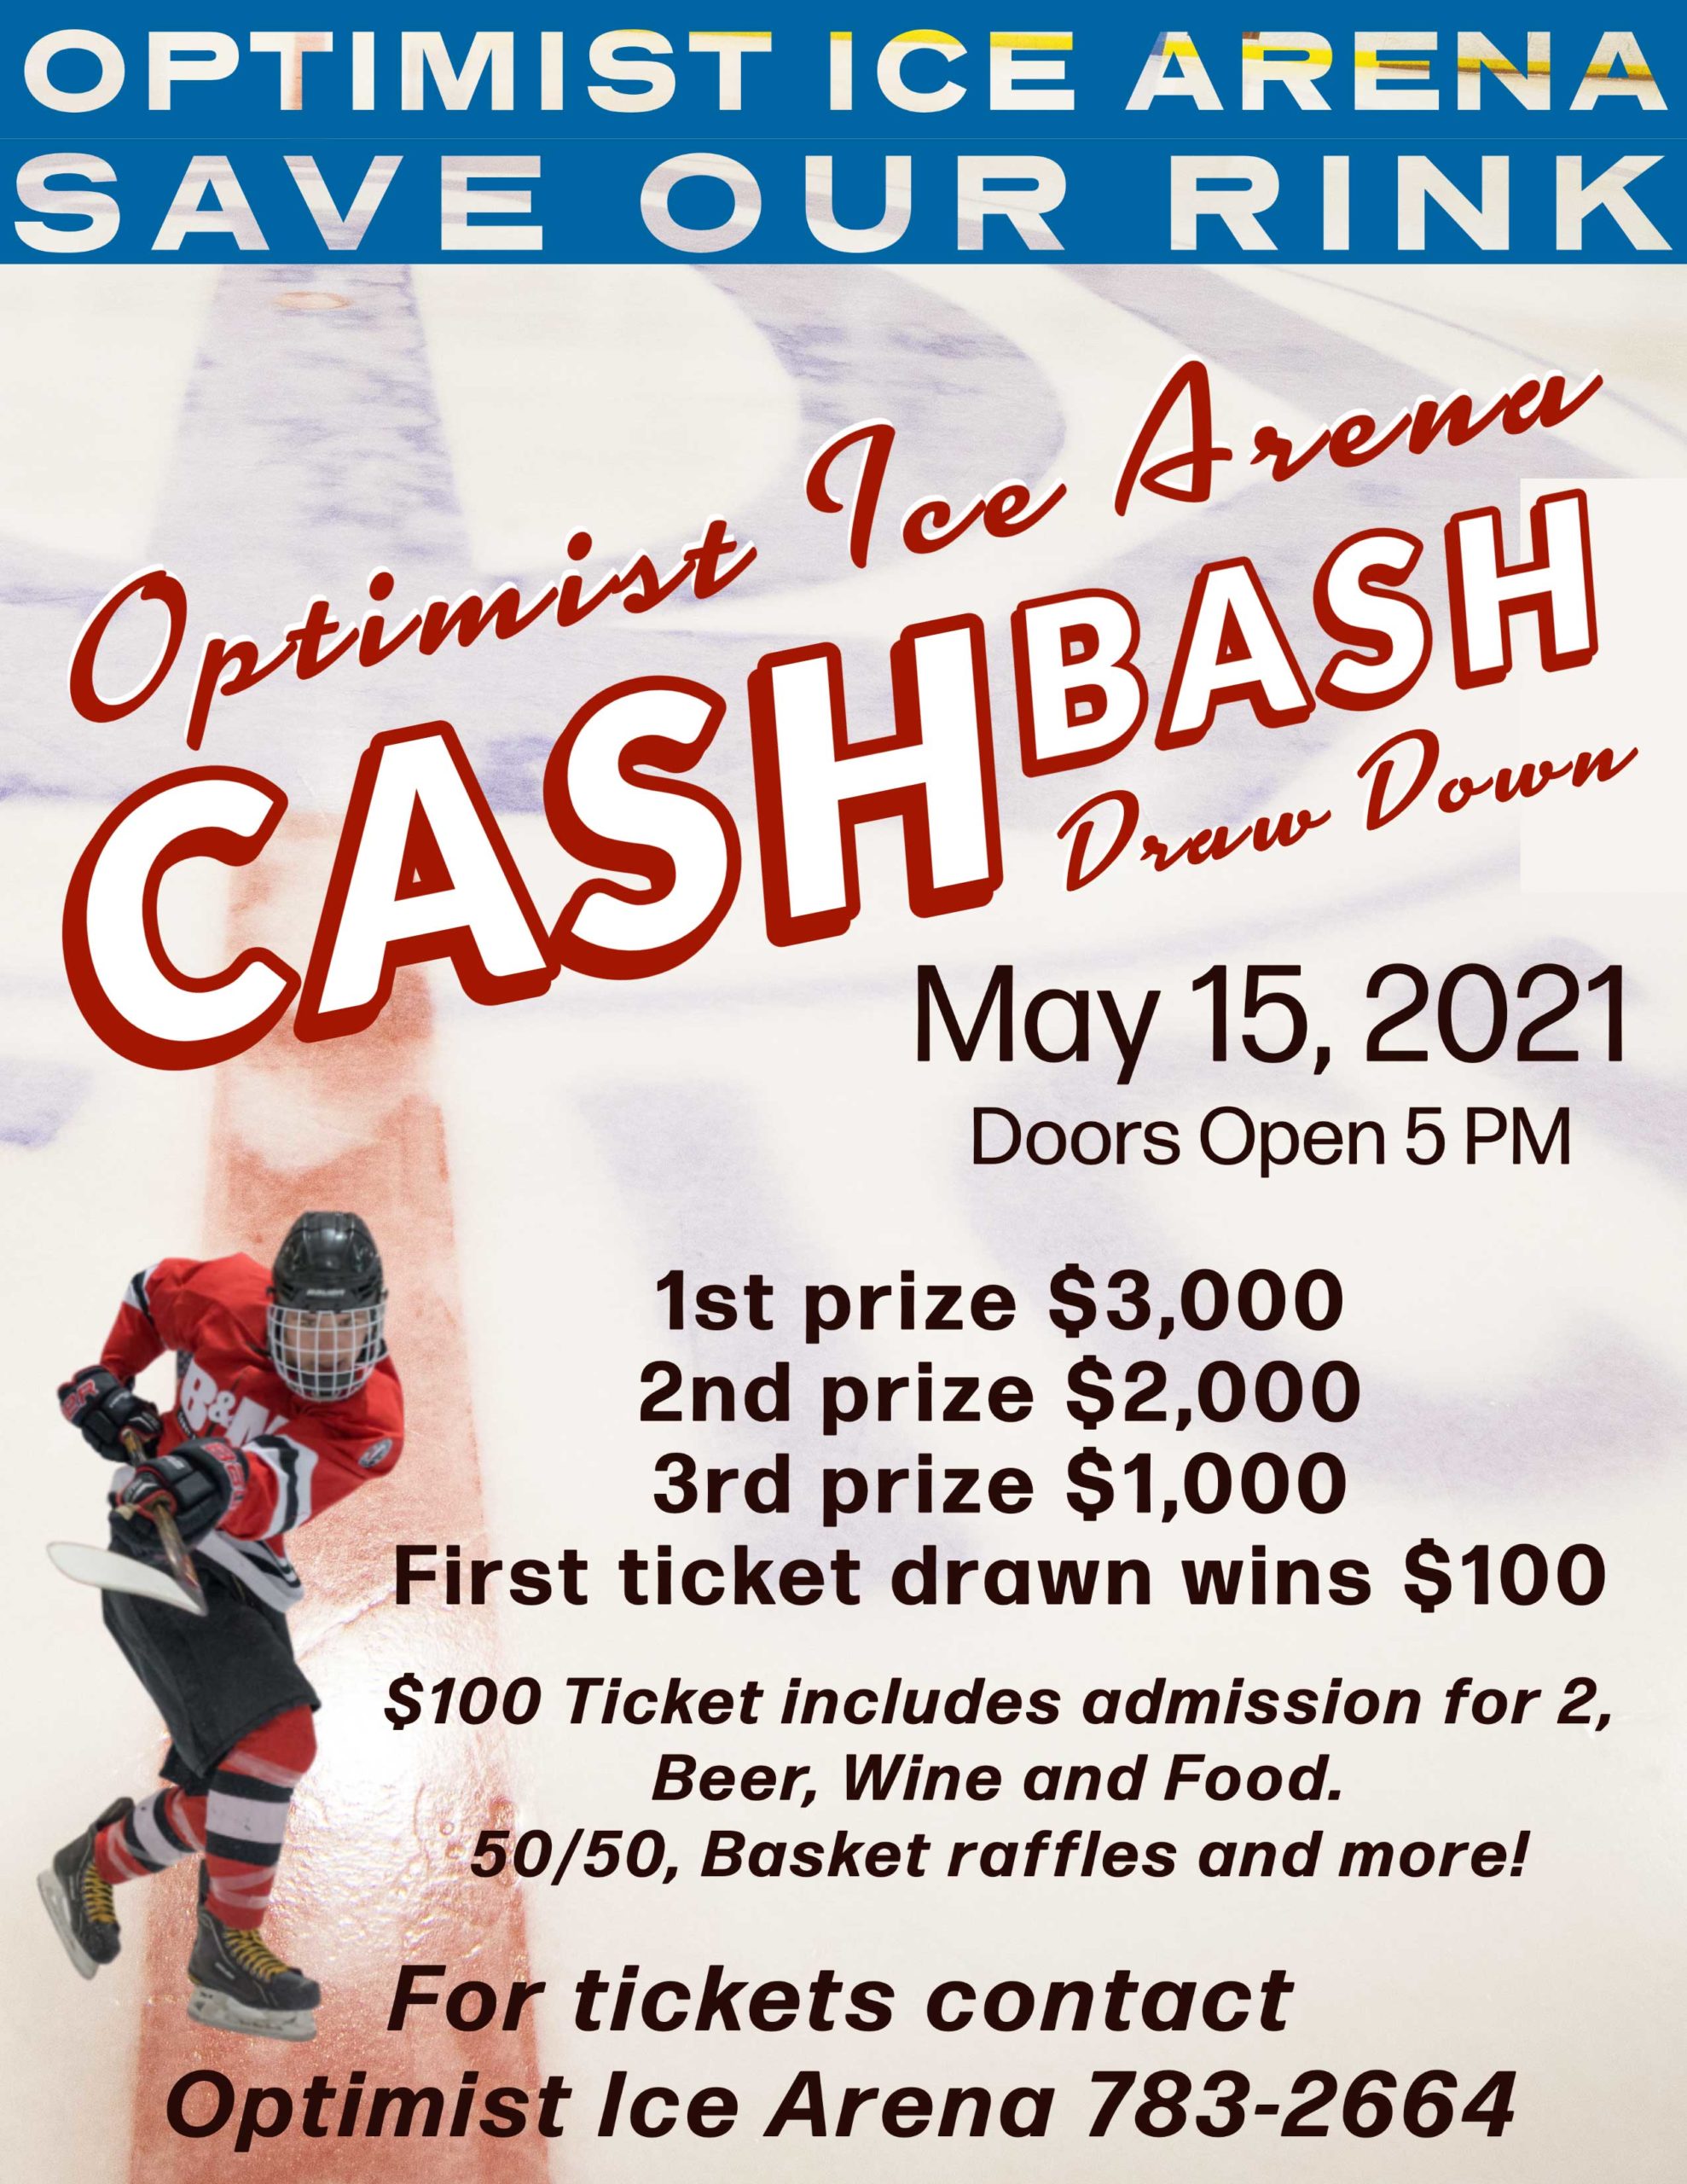 Optimist Ice Arena Announces “Save Our Rink Cash Bash”